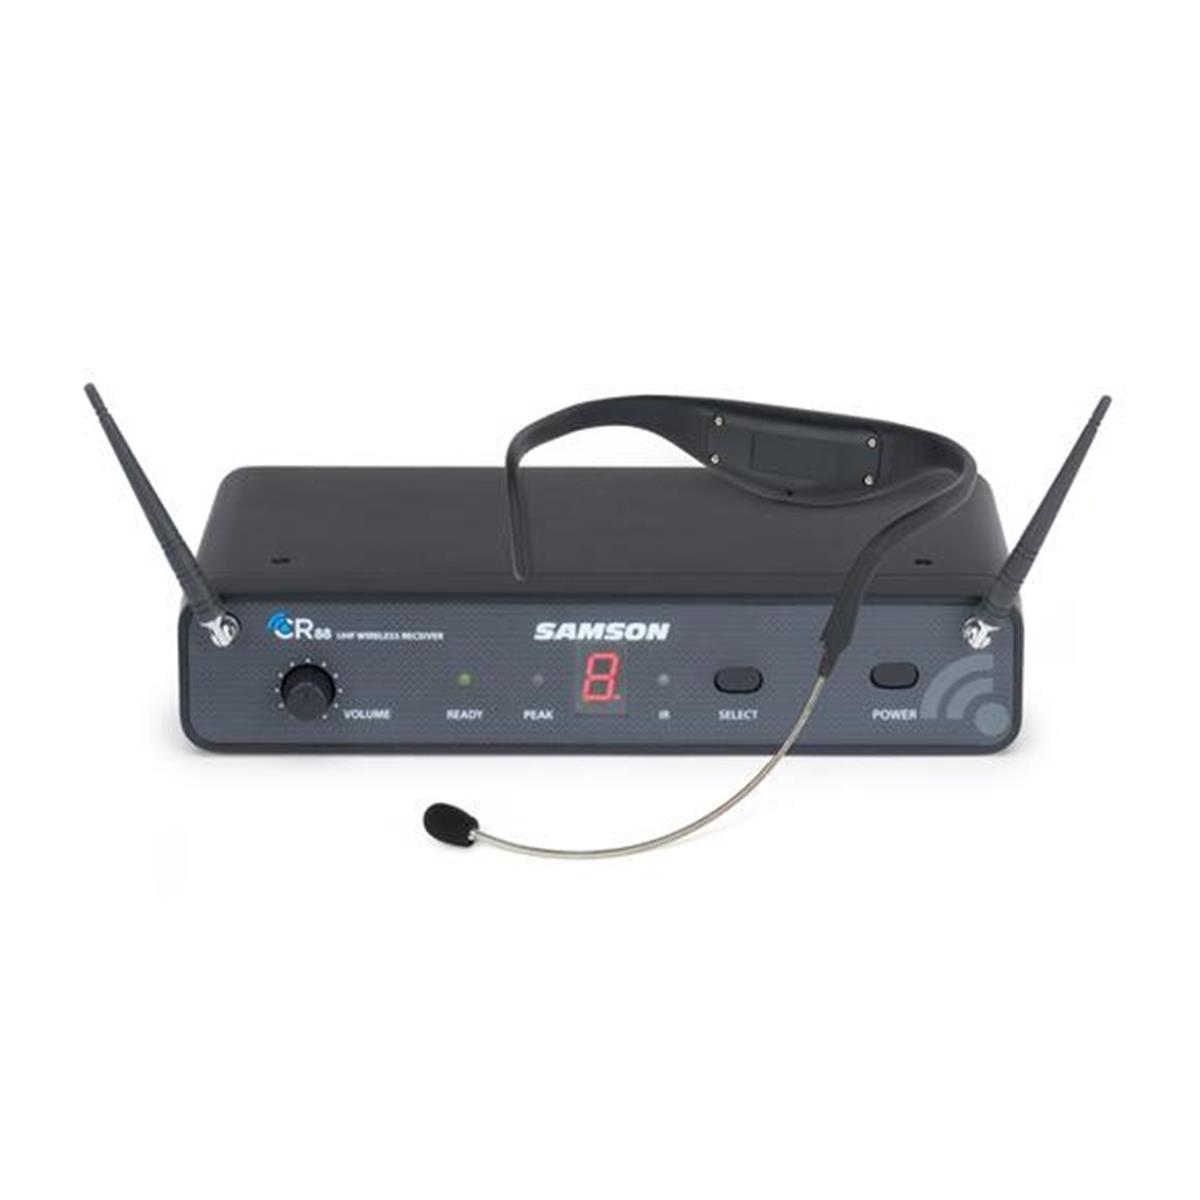 SAMSON AIRLINE 88 AH8 FITNESS Headset System AEROBIC ARCHETTO - Voce - Audio Microfoni - Wireless Voce